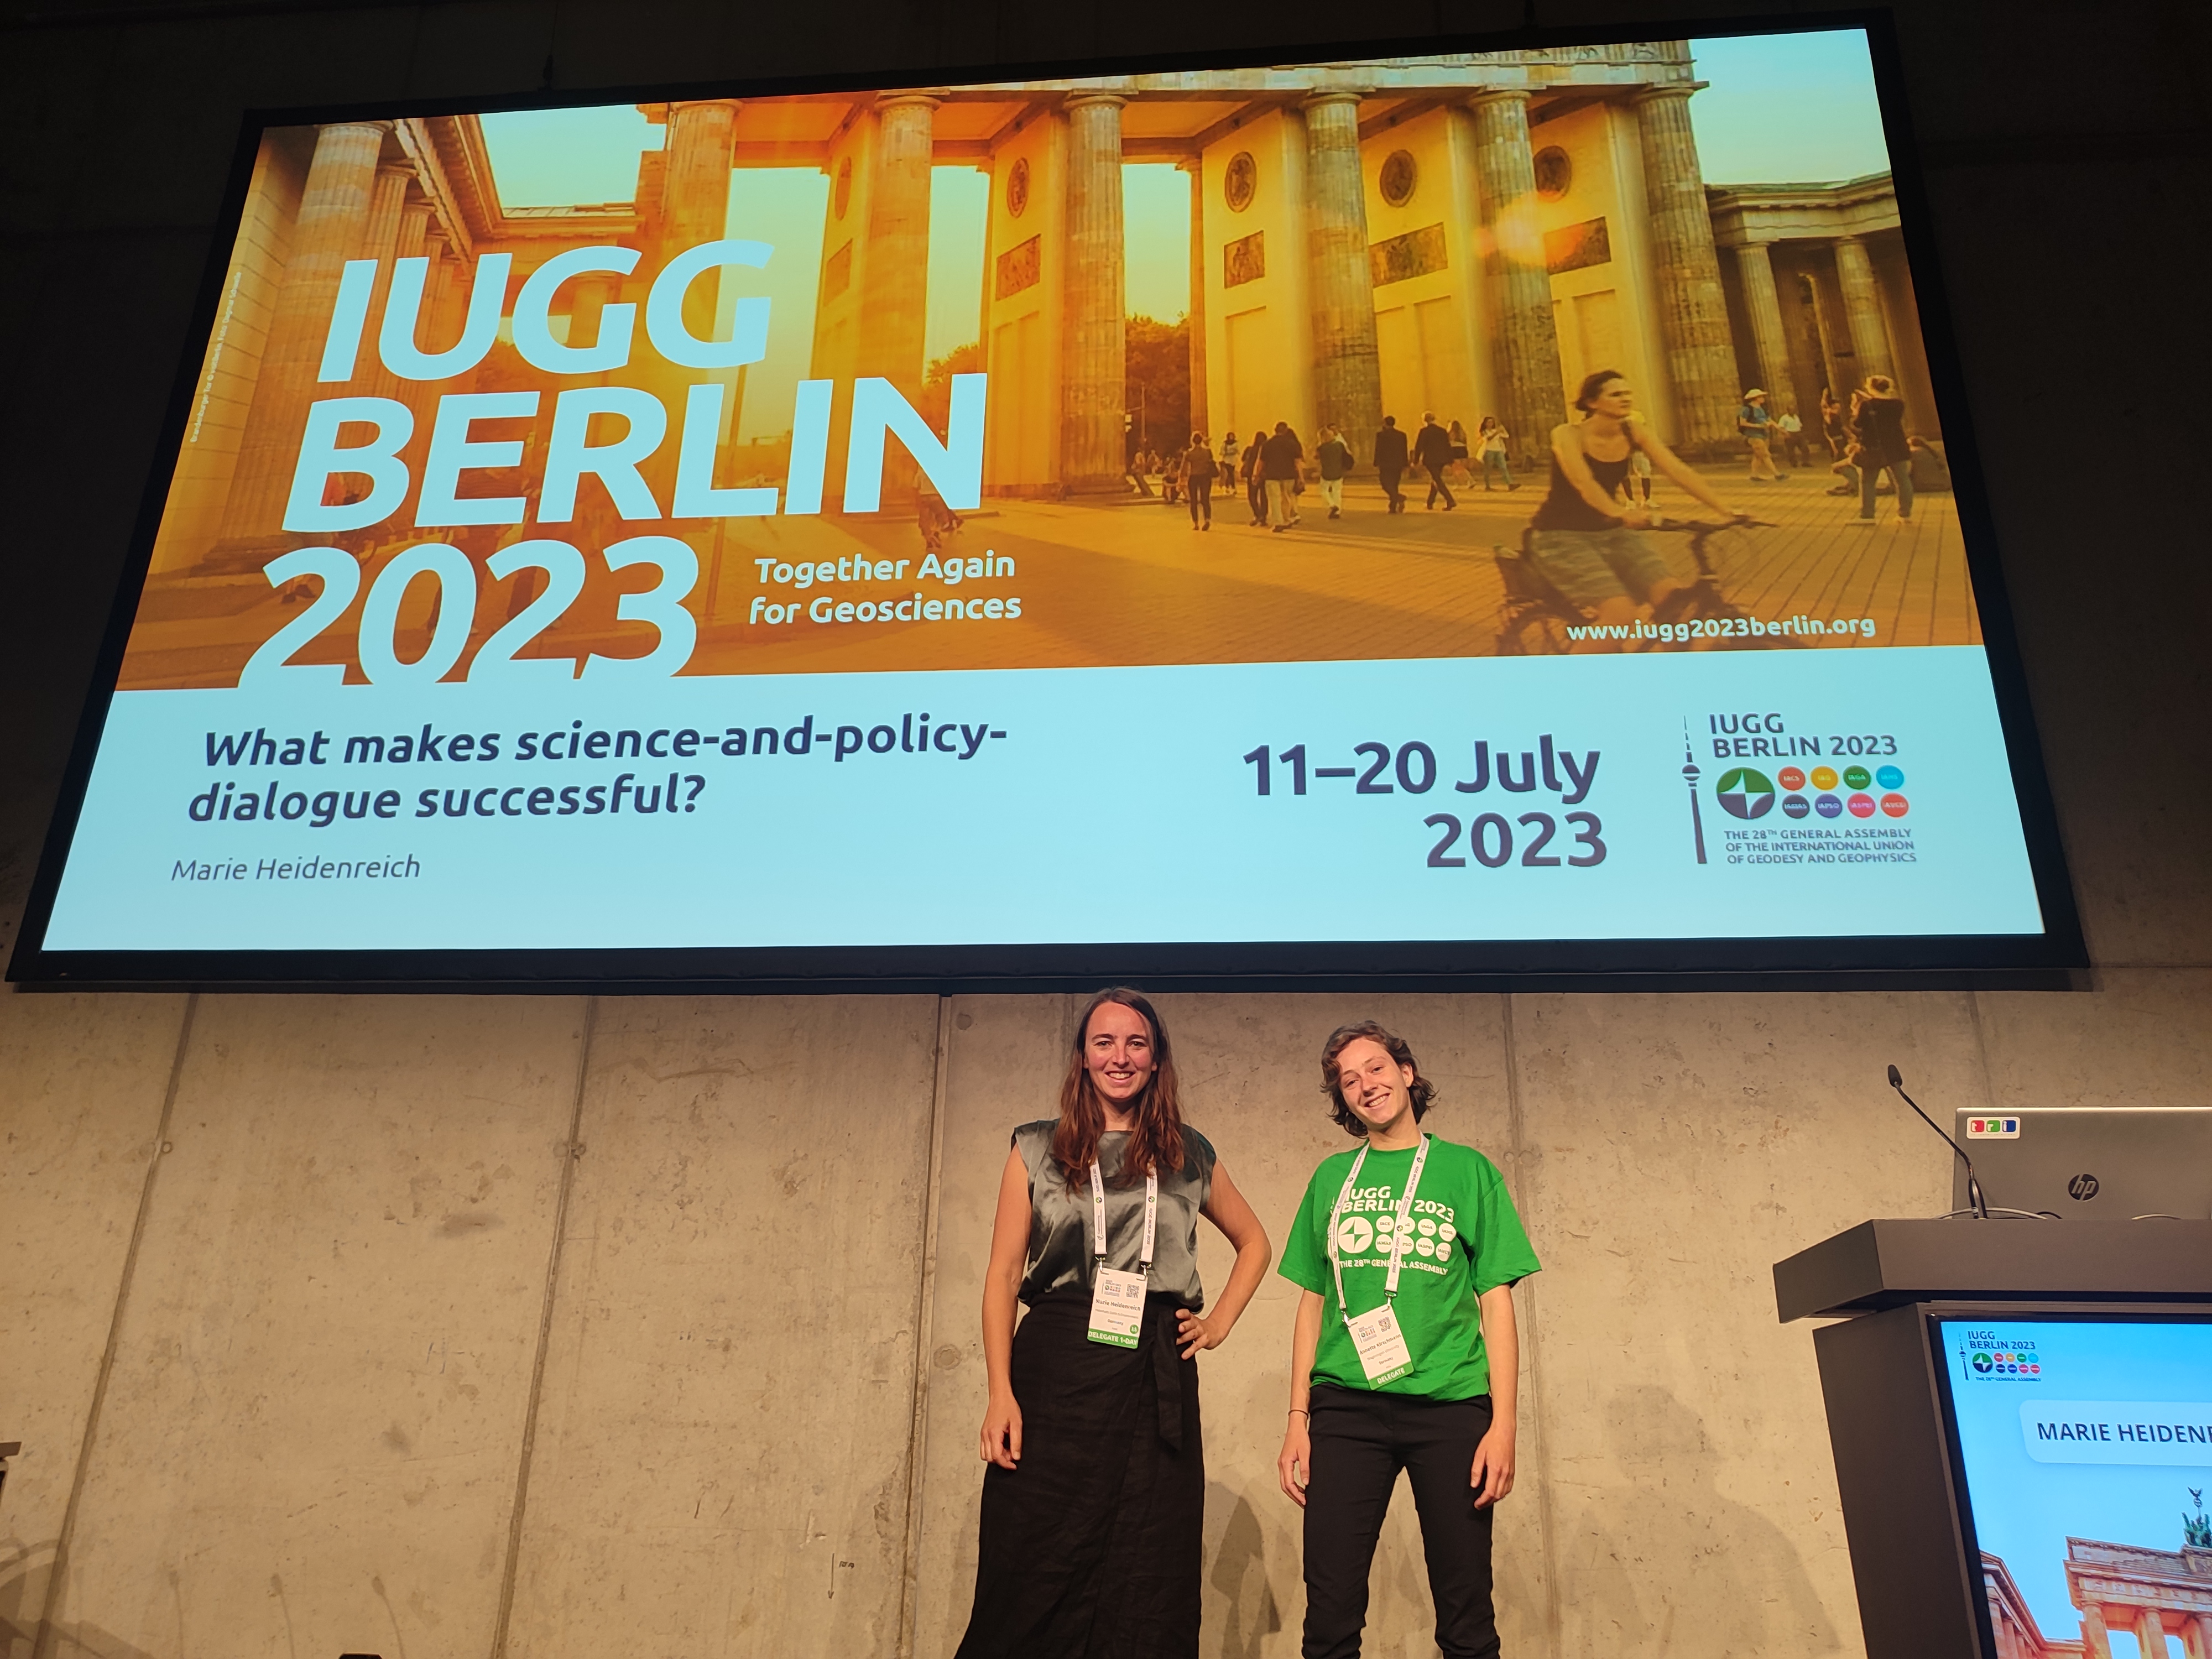 Marie Heidenreich and Annette Kirschmann present at the IUGG 2023